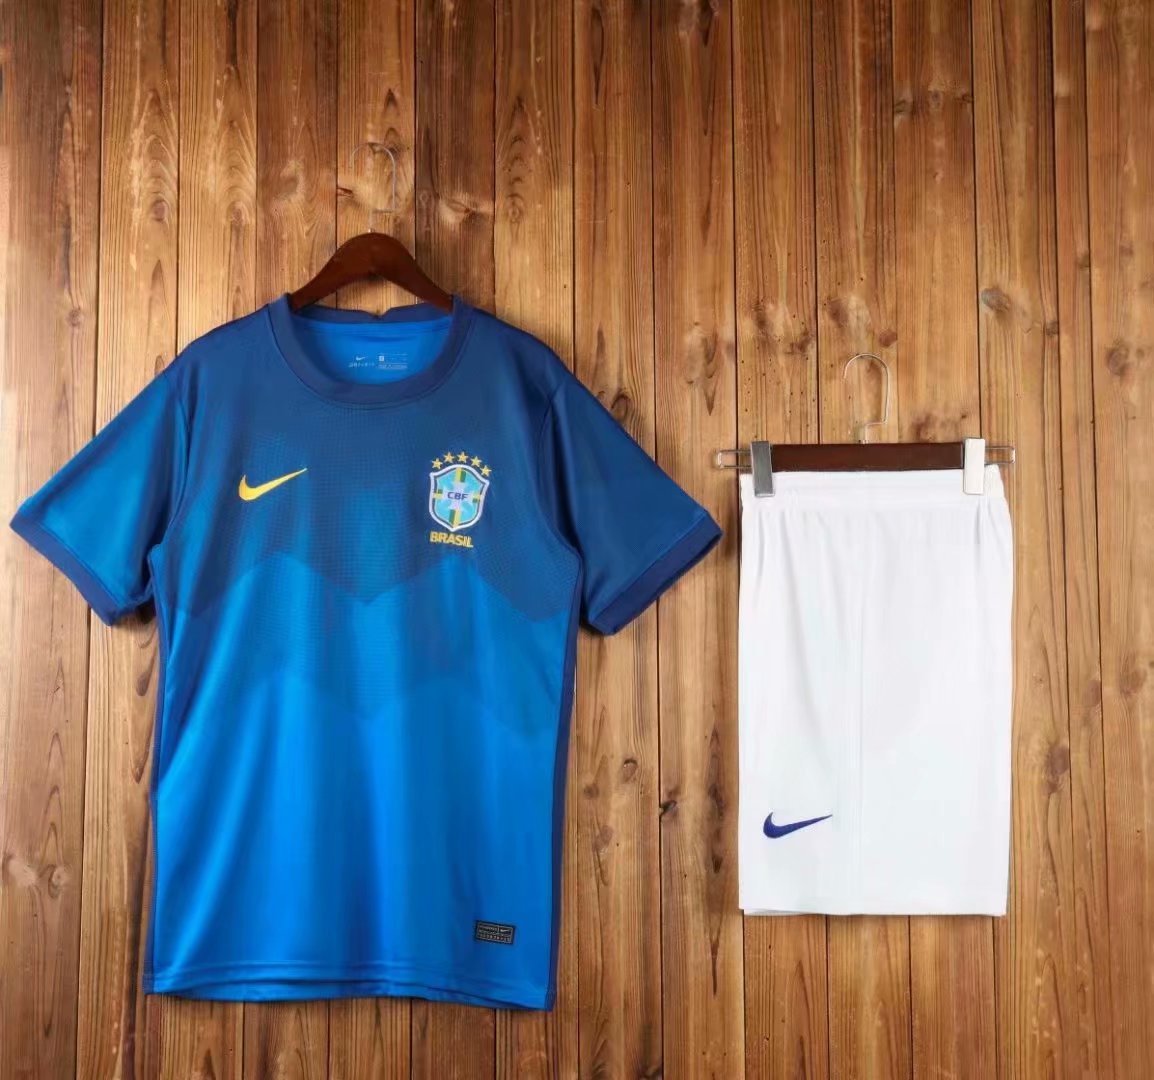 20/21 New Adult Brazil blue soccer uniforms national team football suit